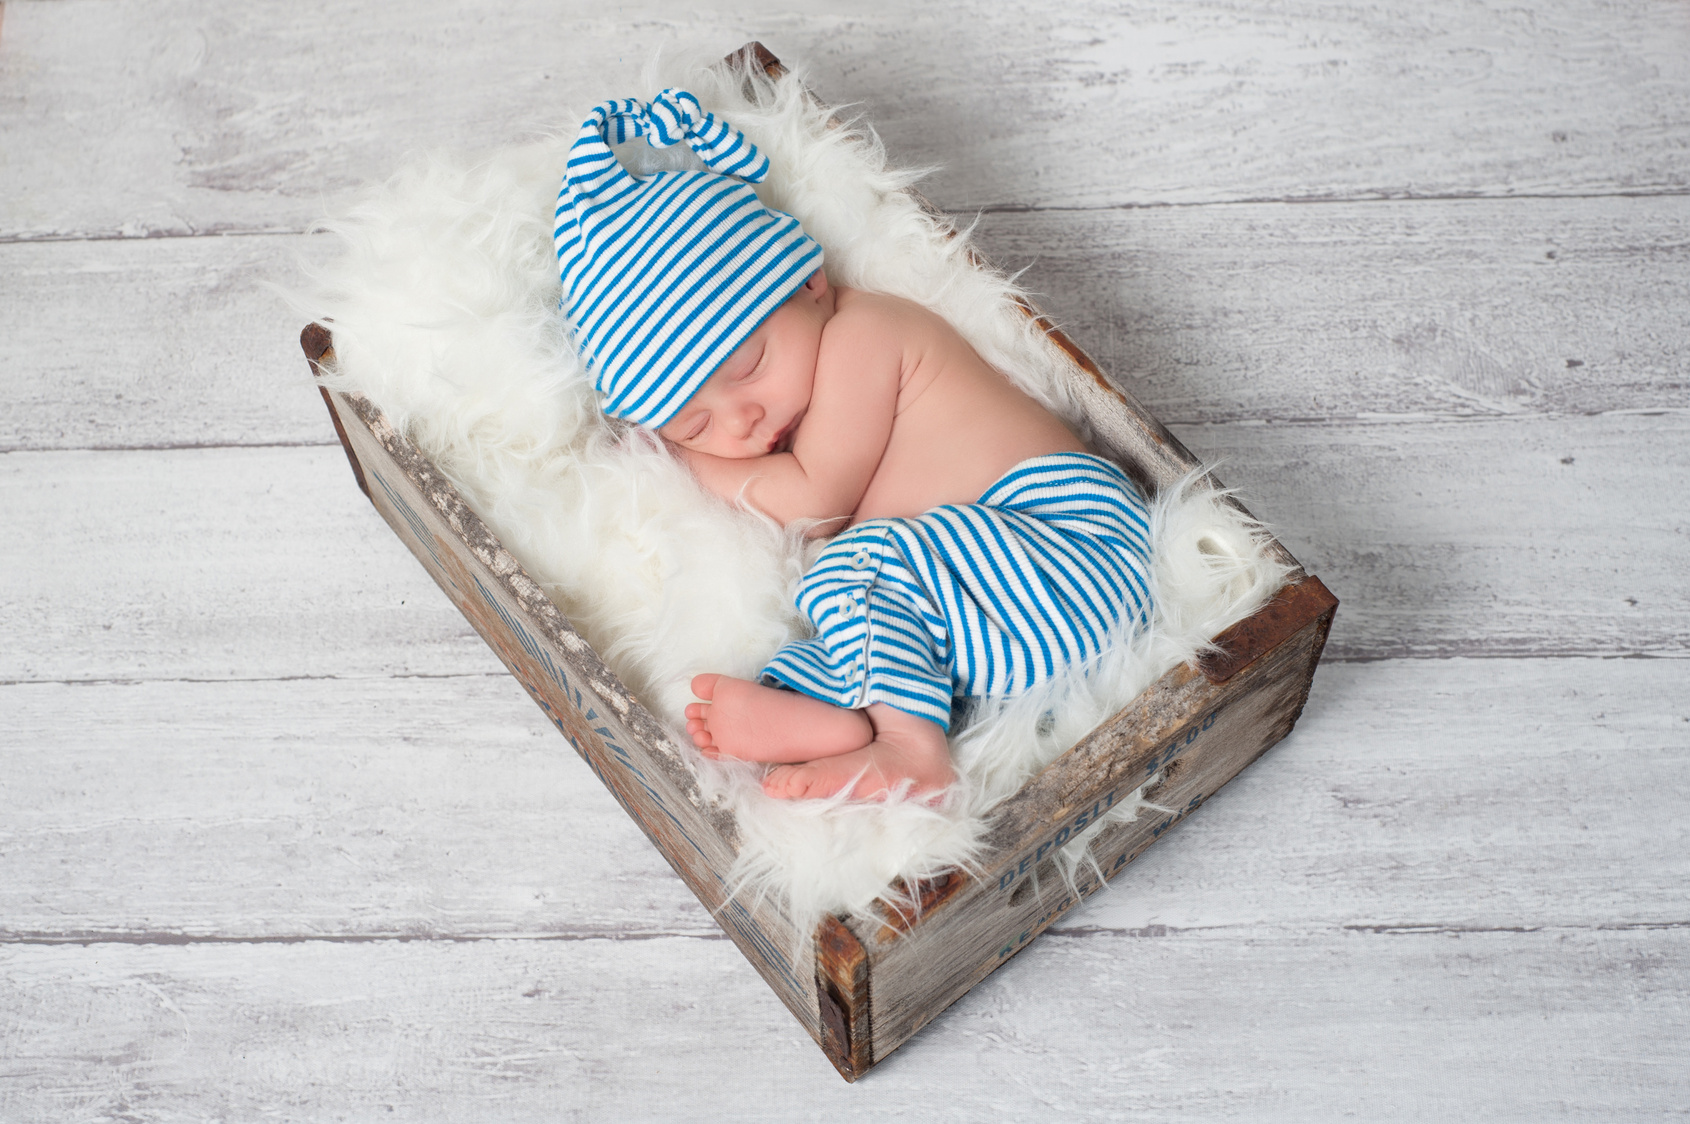 Sleeping Newborn Baby Wearing Pajamas and a Sleeping Cap